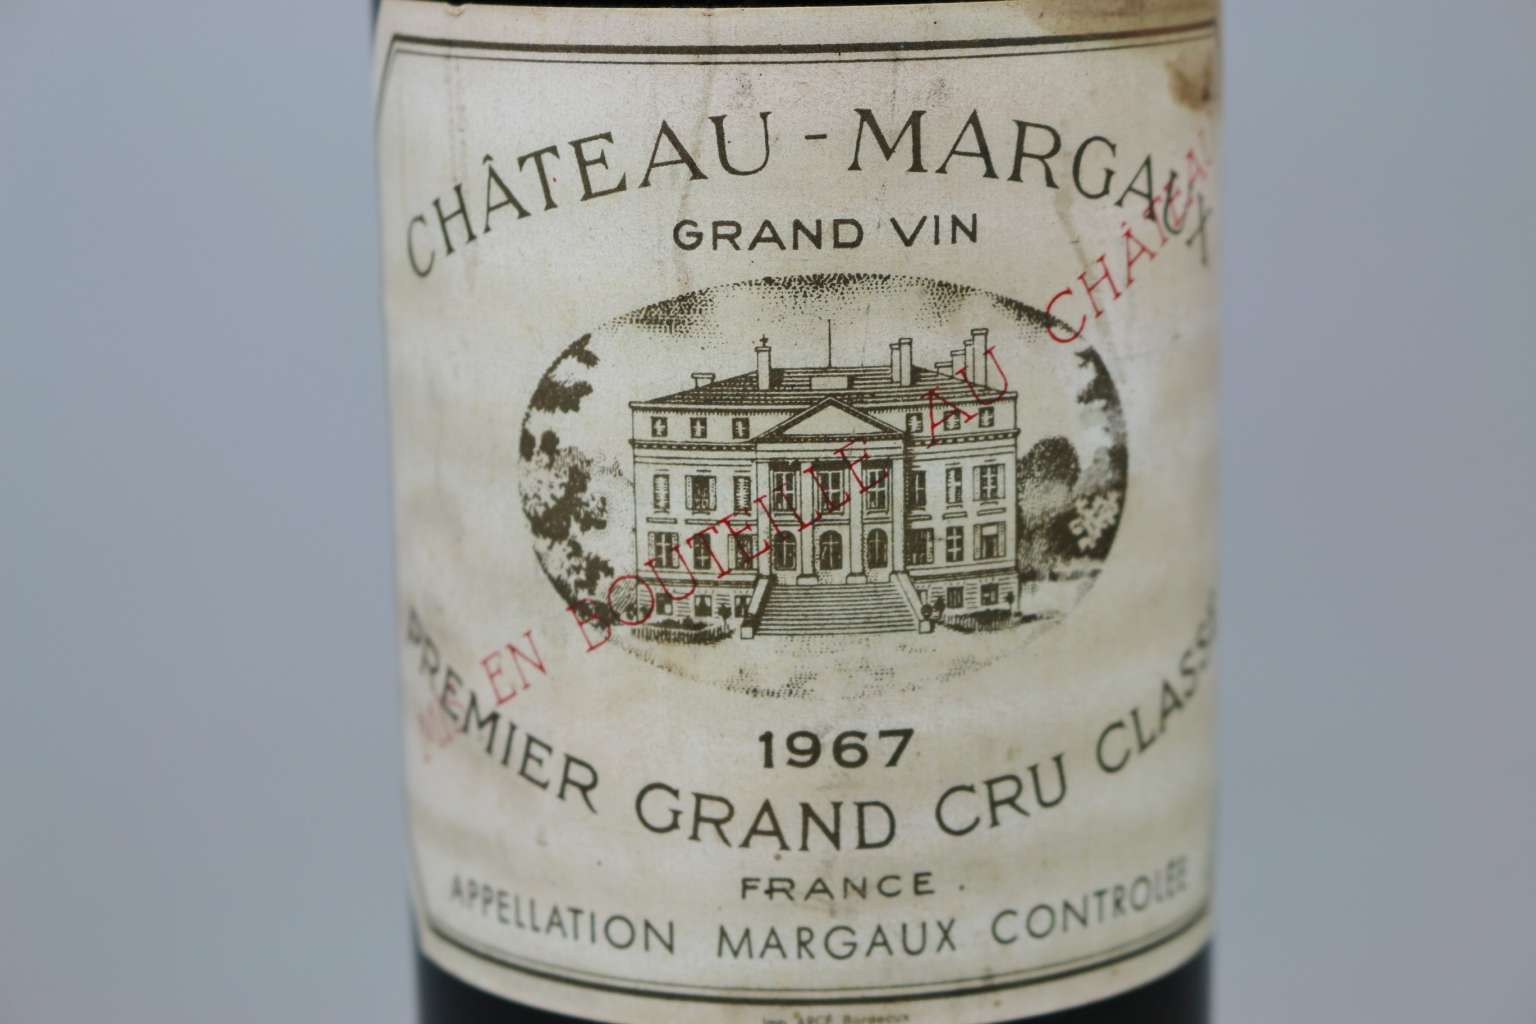 Chateau-Margaux Premier Grand Cru Classe 1967 - Image 2 of 3